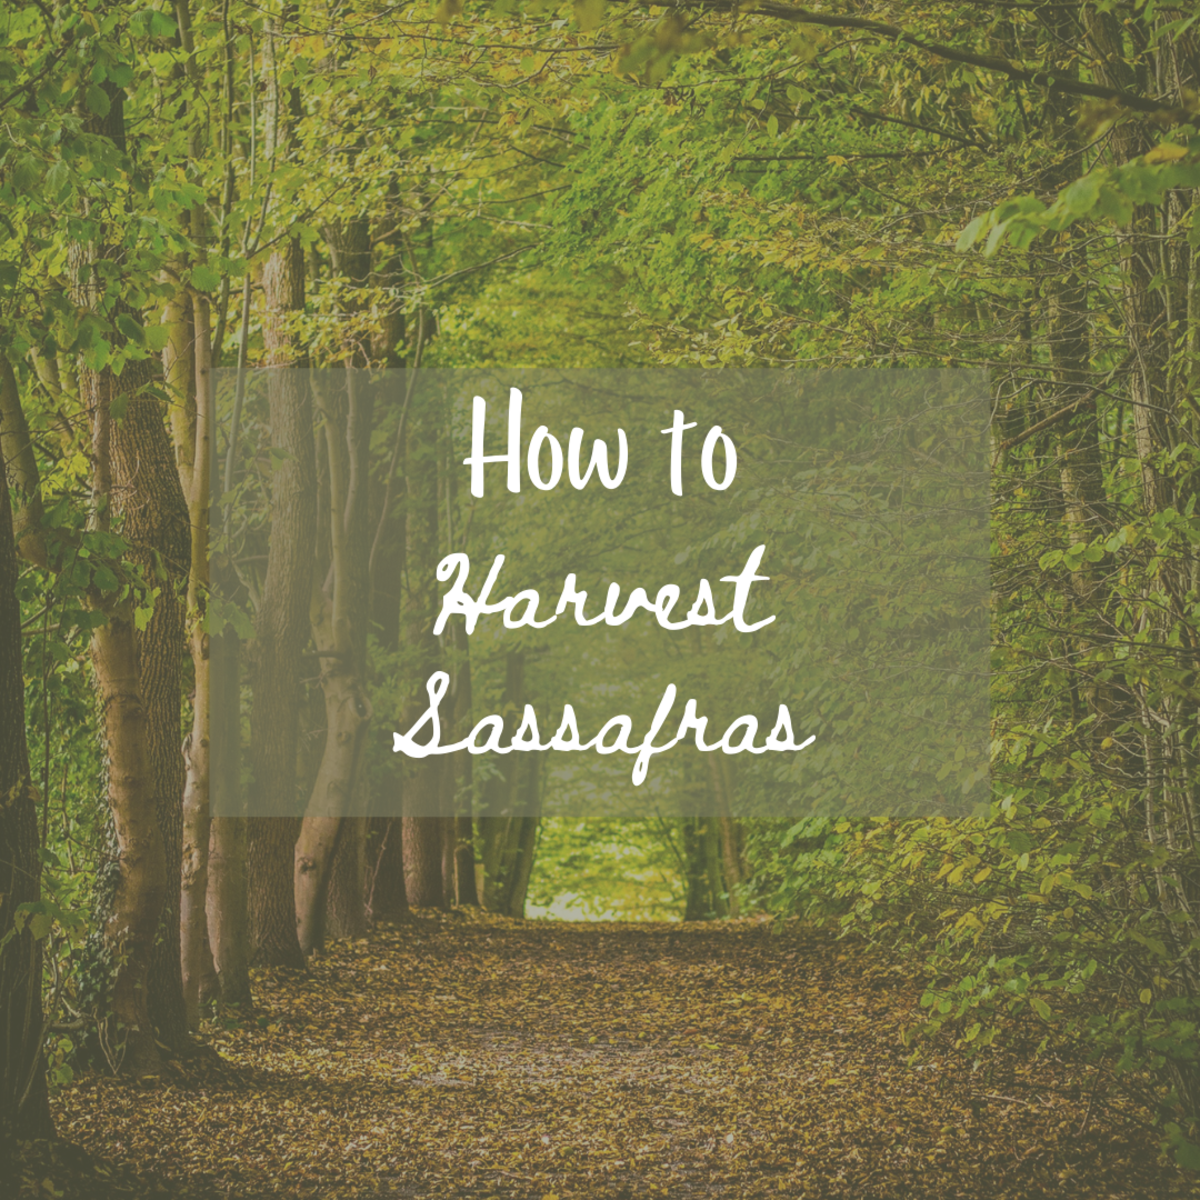 Harvesting Sassafras